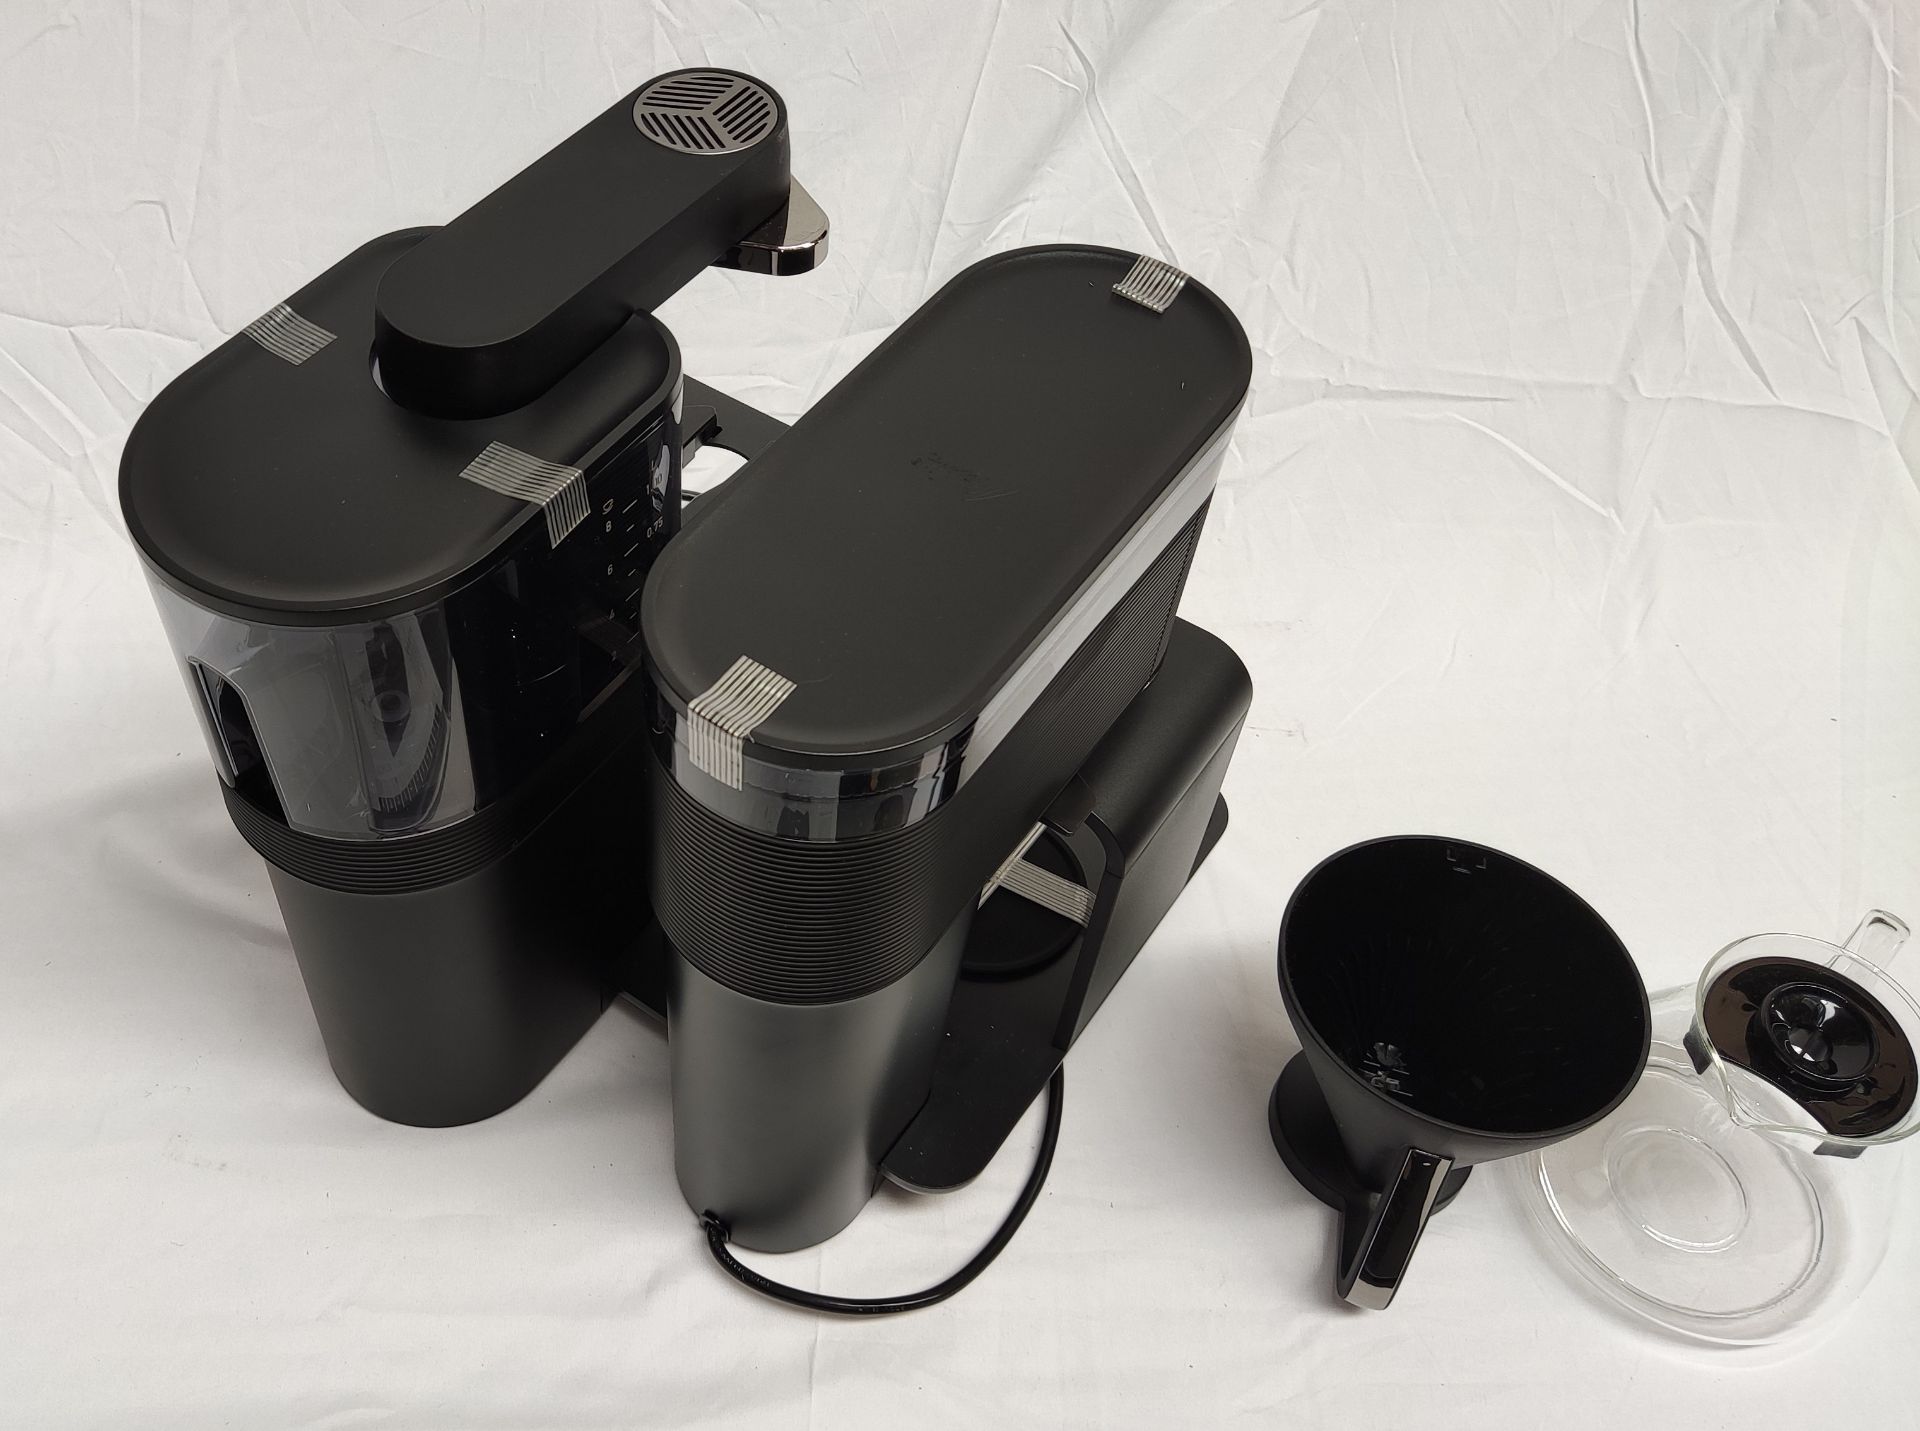 1 x MELITTA Epos Coffee Machine With Grinder - Boxed - Original RRP £399 - Ref: 7129012/HJL350/C19/ - Image 11 of 14